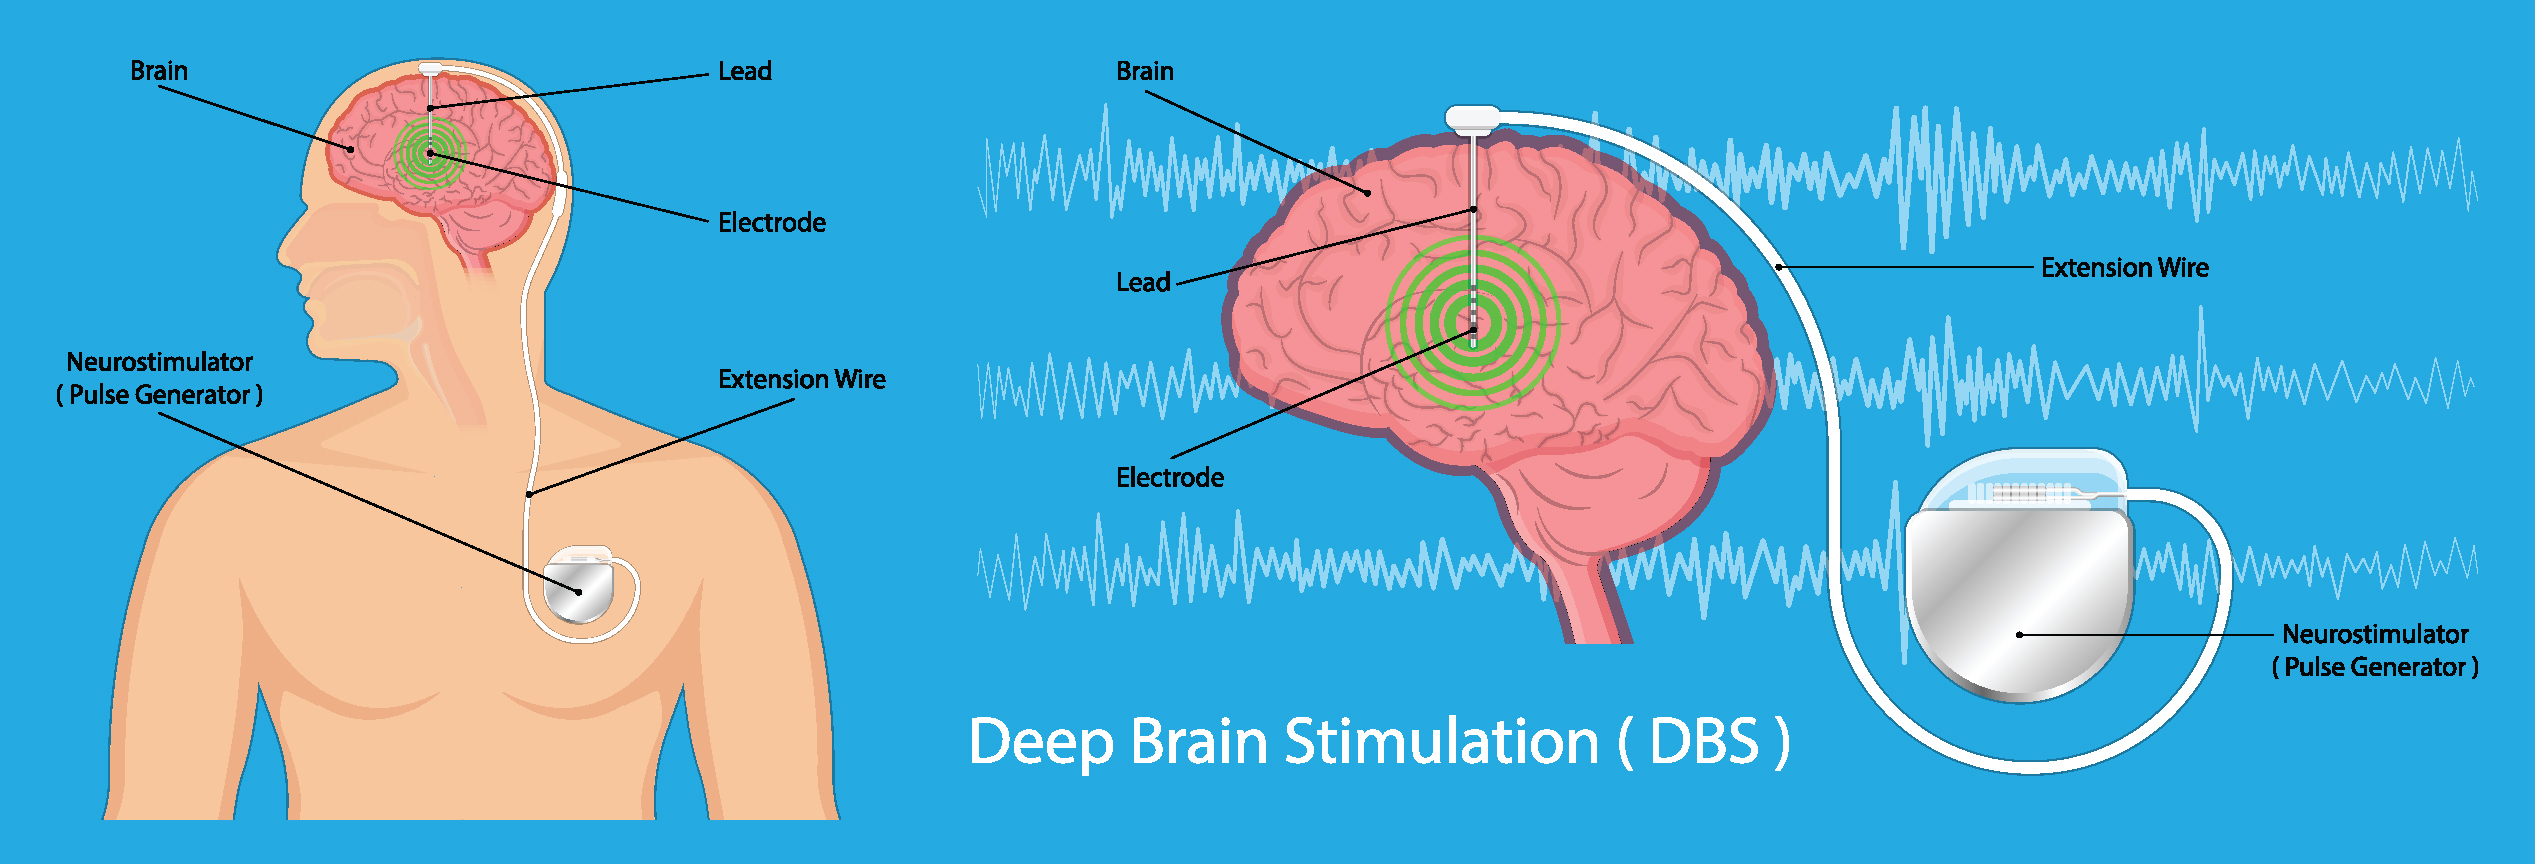 Deep-Brain Stimulation for Parkinson's Disease